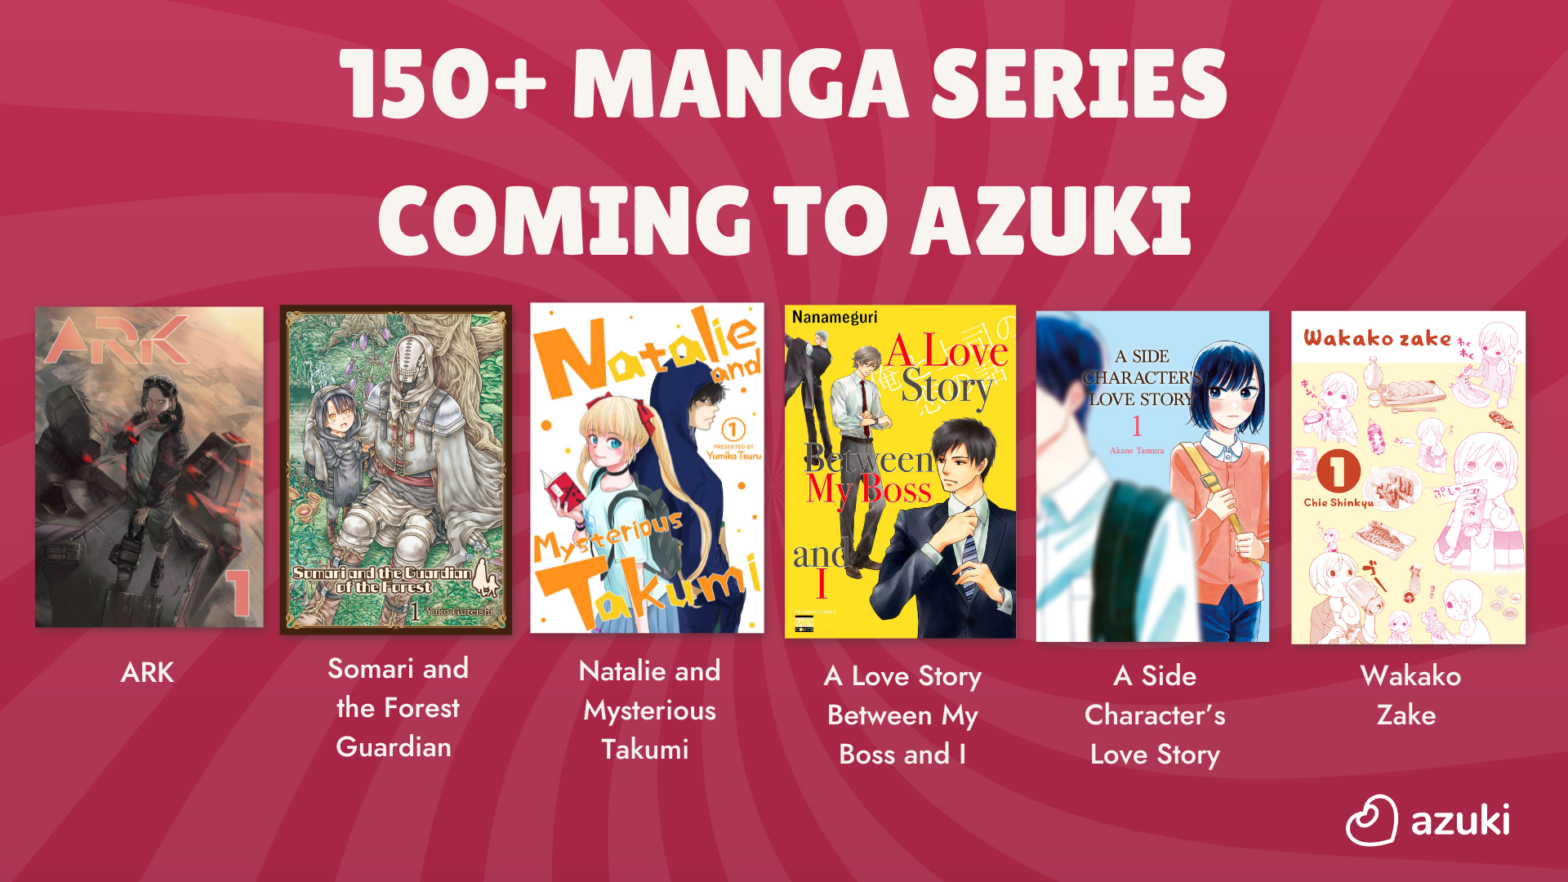 150+ Manga Series Coming to Azuki. ARK> Somari and the Forst Guardian. Natalie and Mysterious Takumi. A Love Story Between My Boss and I. A Side Character’s Love Story. Wakako Zake. Azuki.